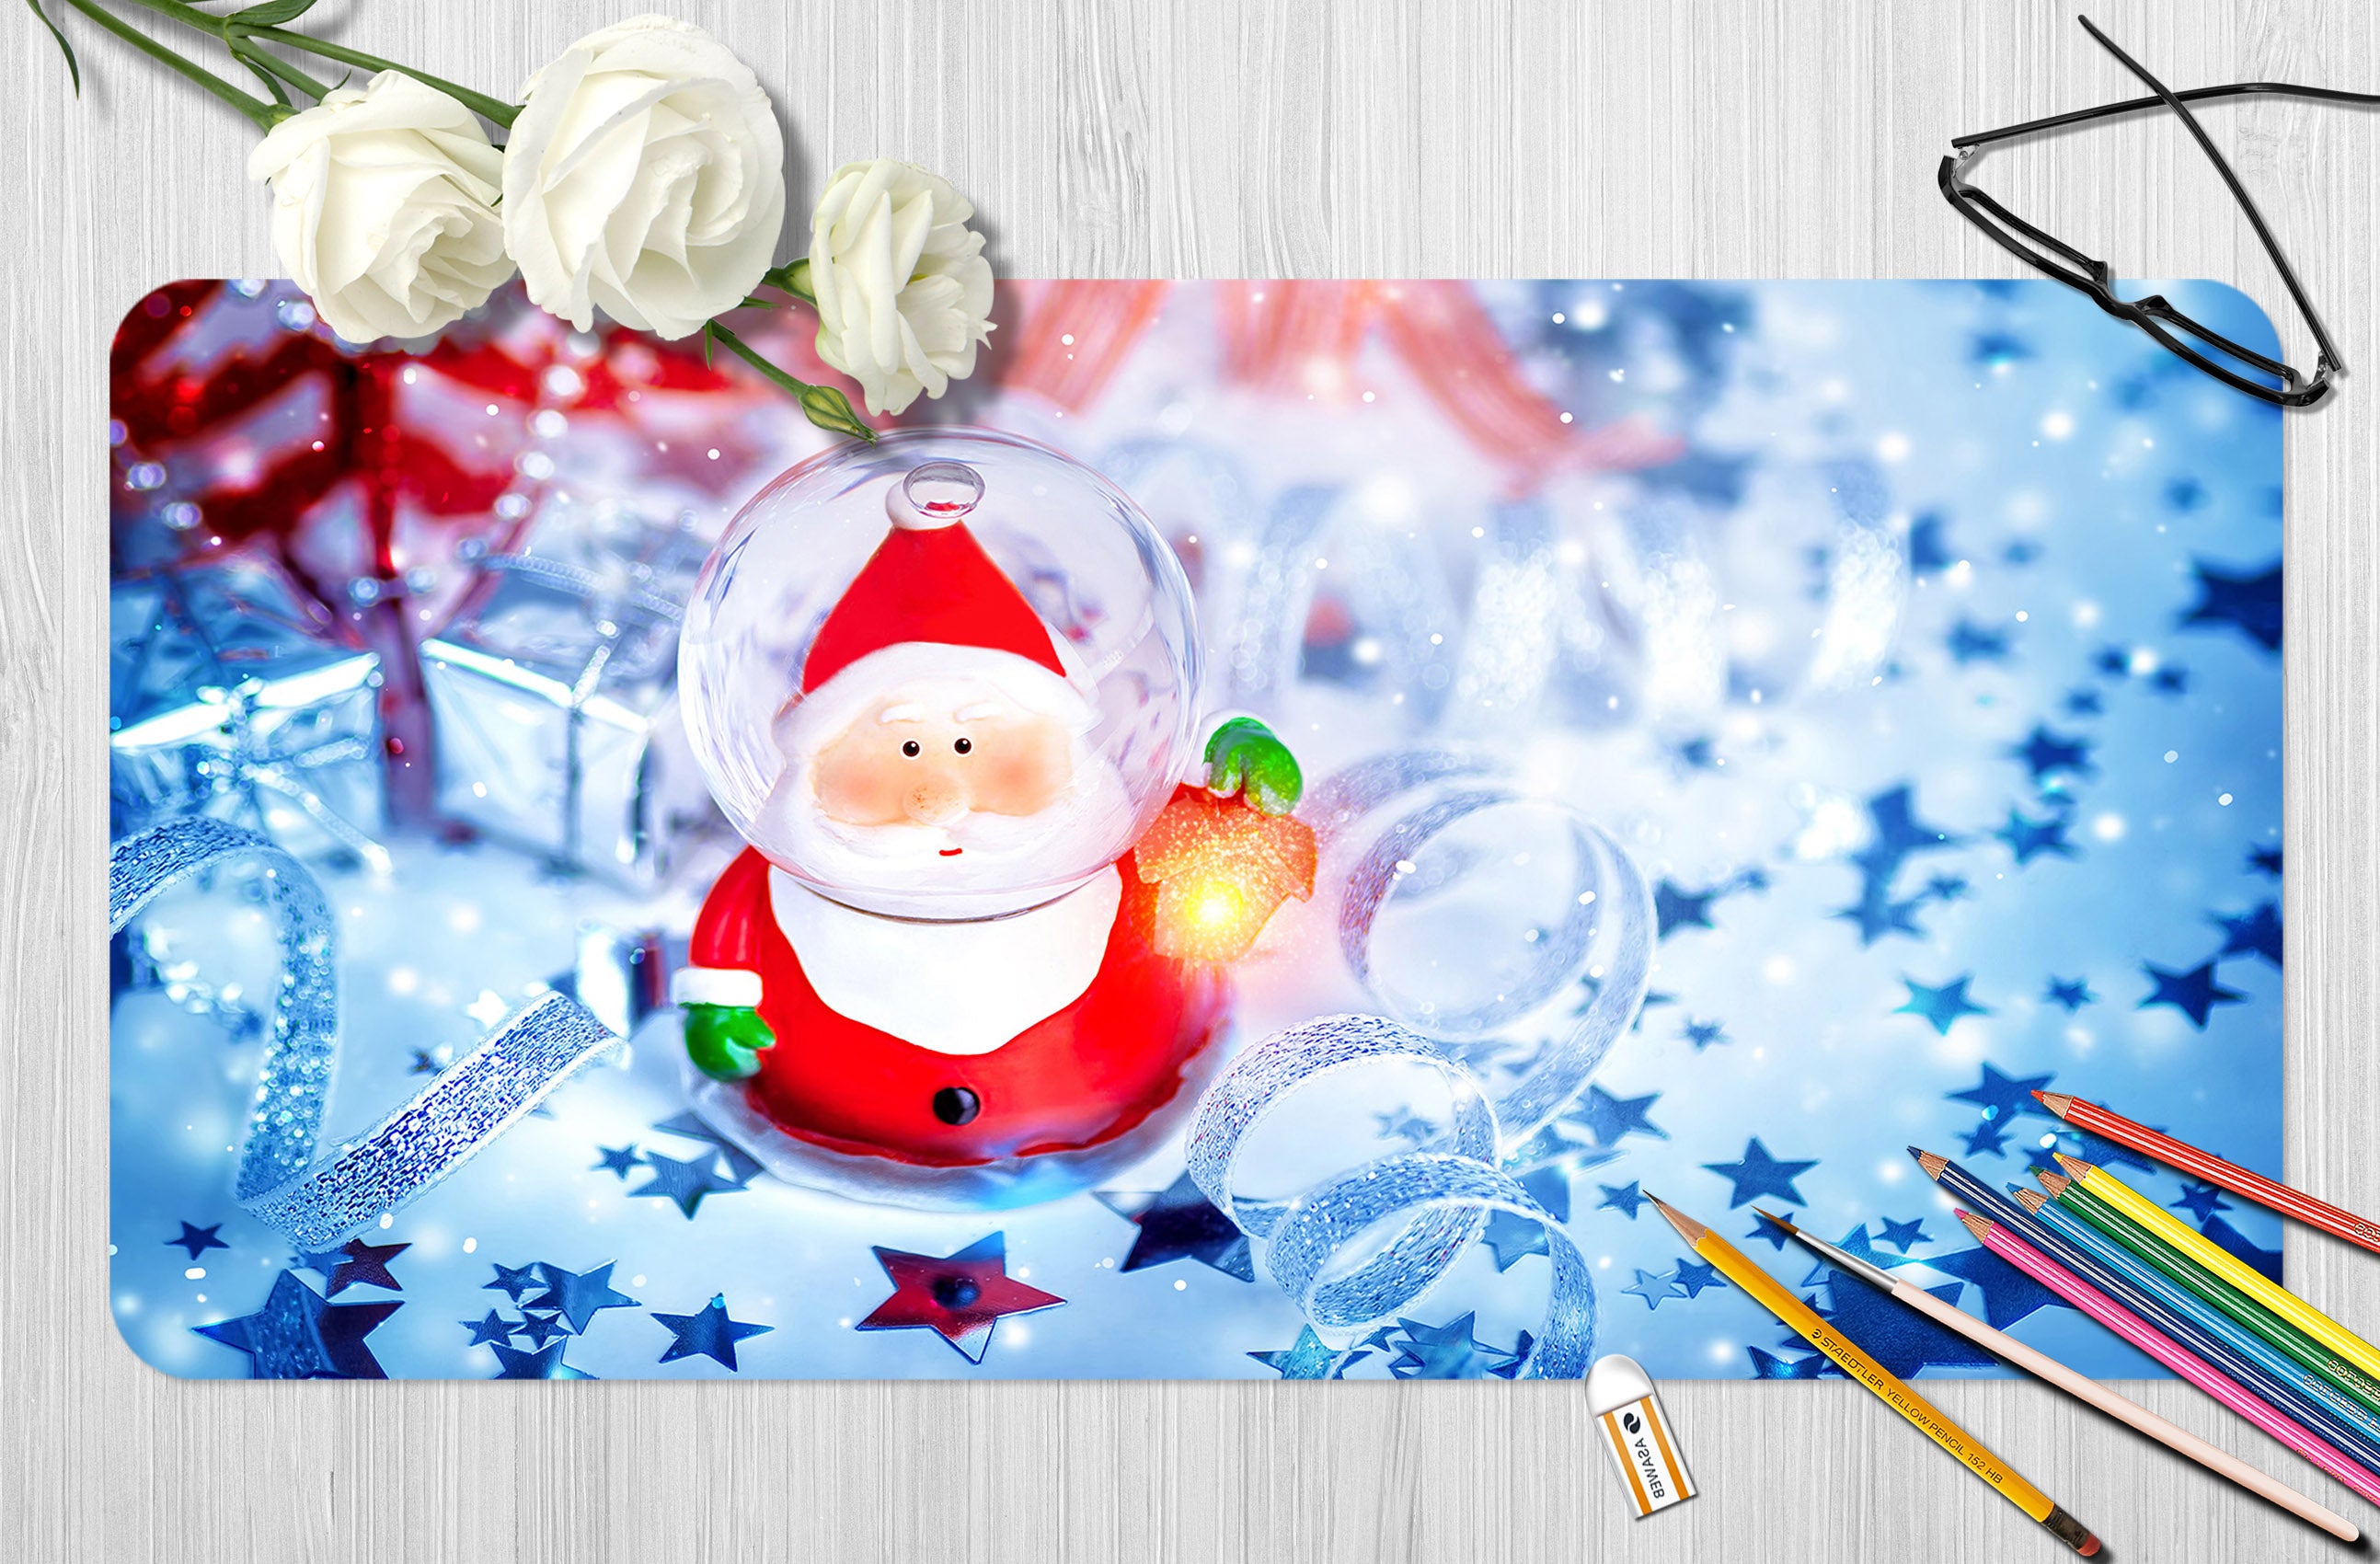 3D Santa Claus Ornaments 51177 Christmas Desk Mat Xmas